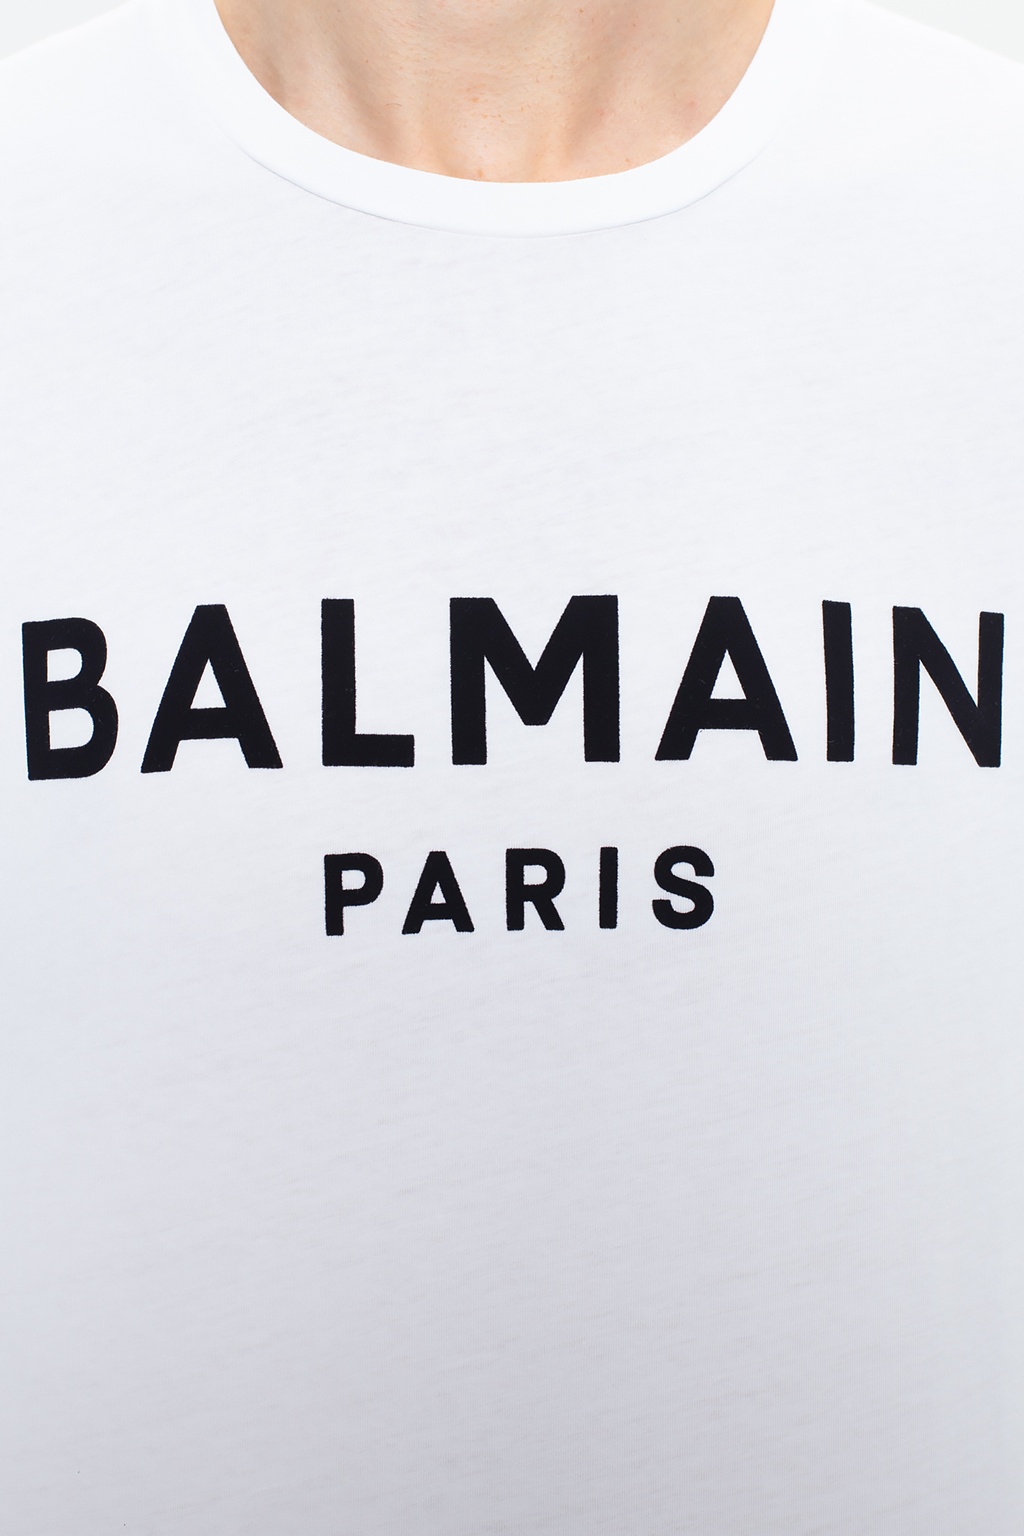 Balmain Jourdan Dunn and Kendall Jenner in Embossed balmain for H&M